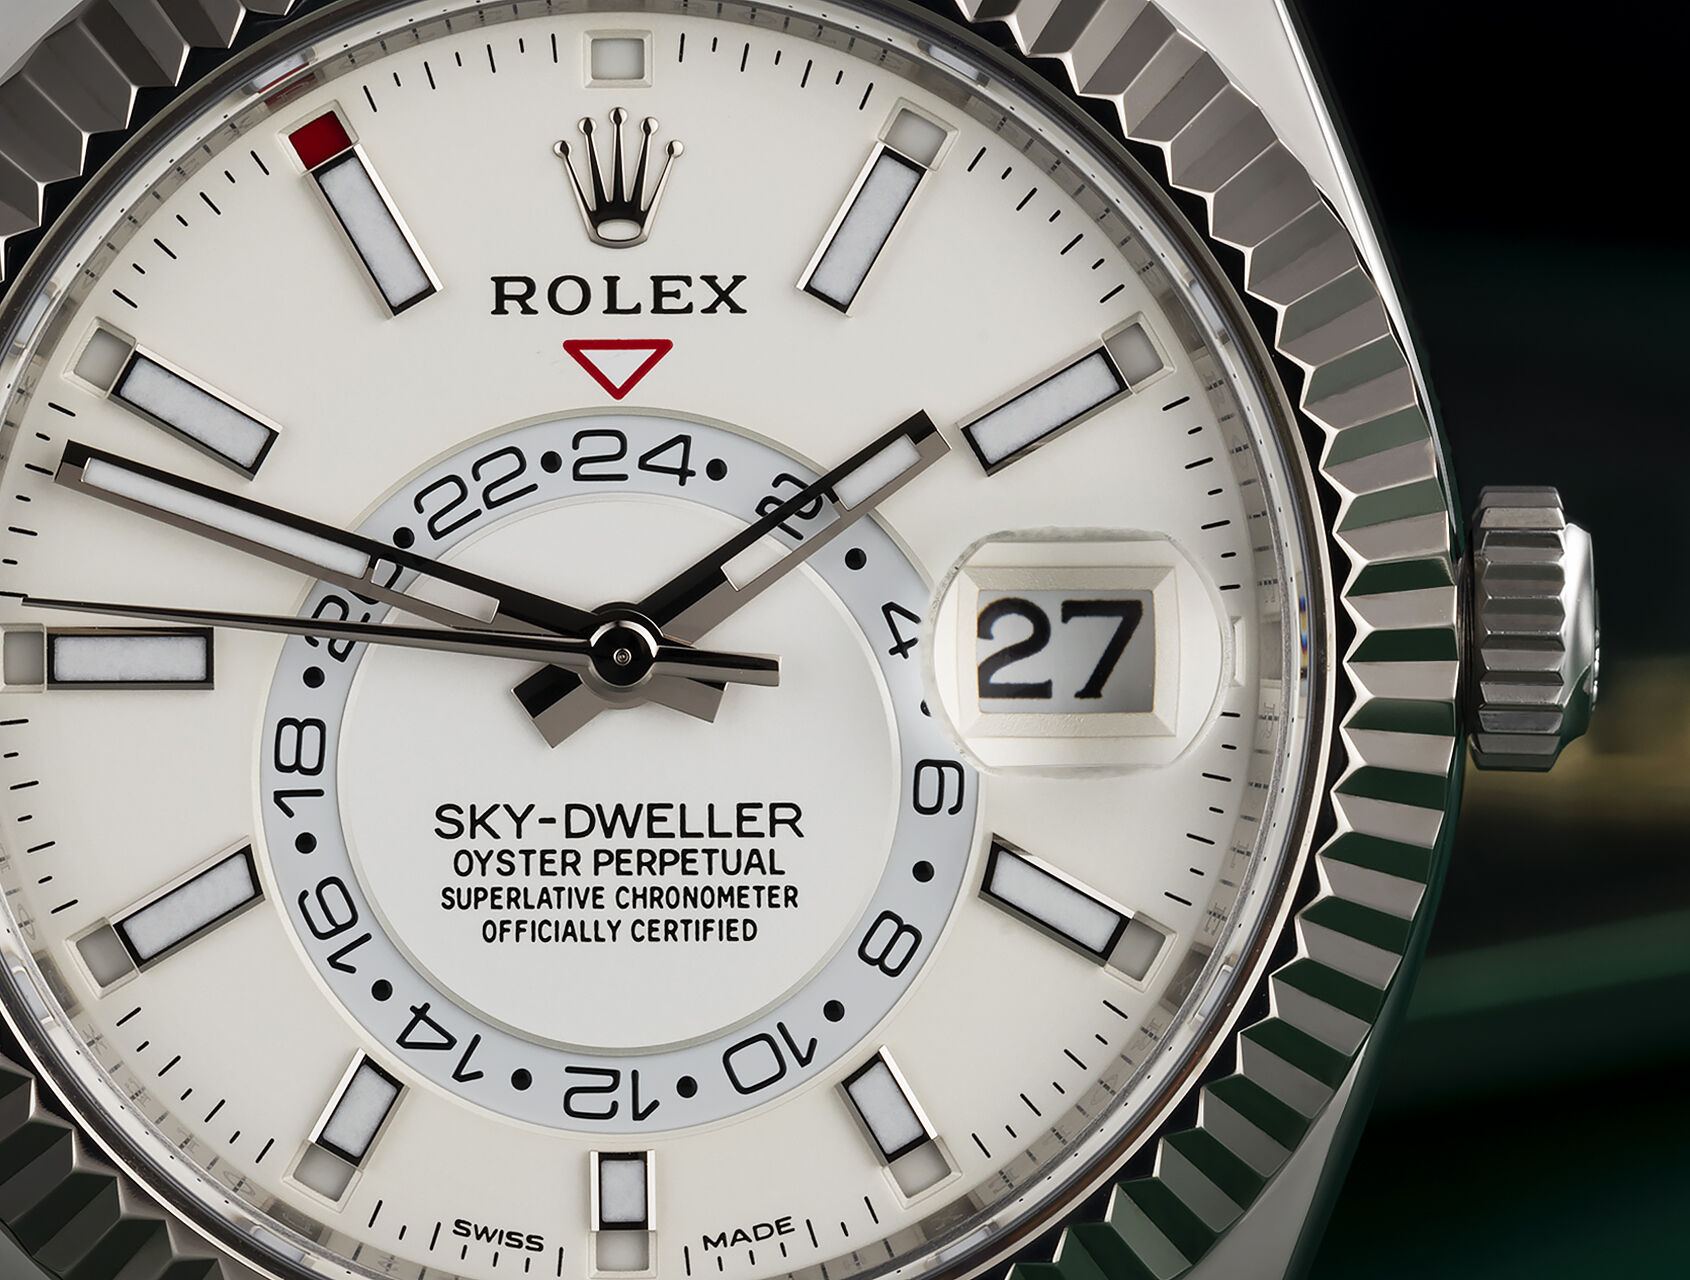 ref 326934 | 326934 - Box & Certificate | Rolex Sky Dweller